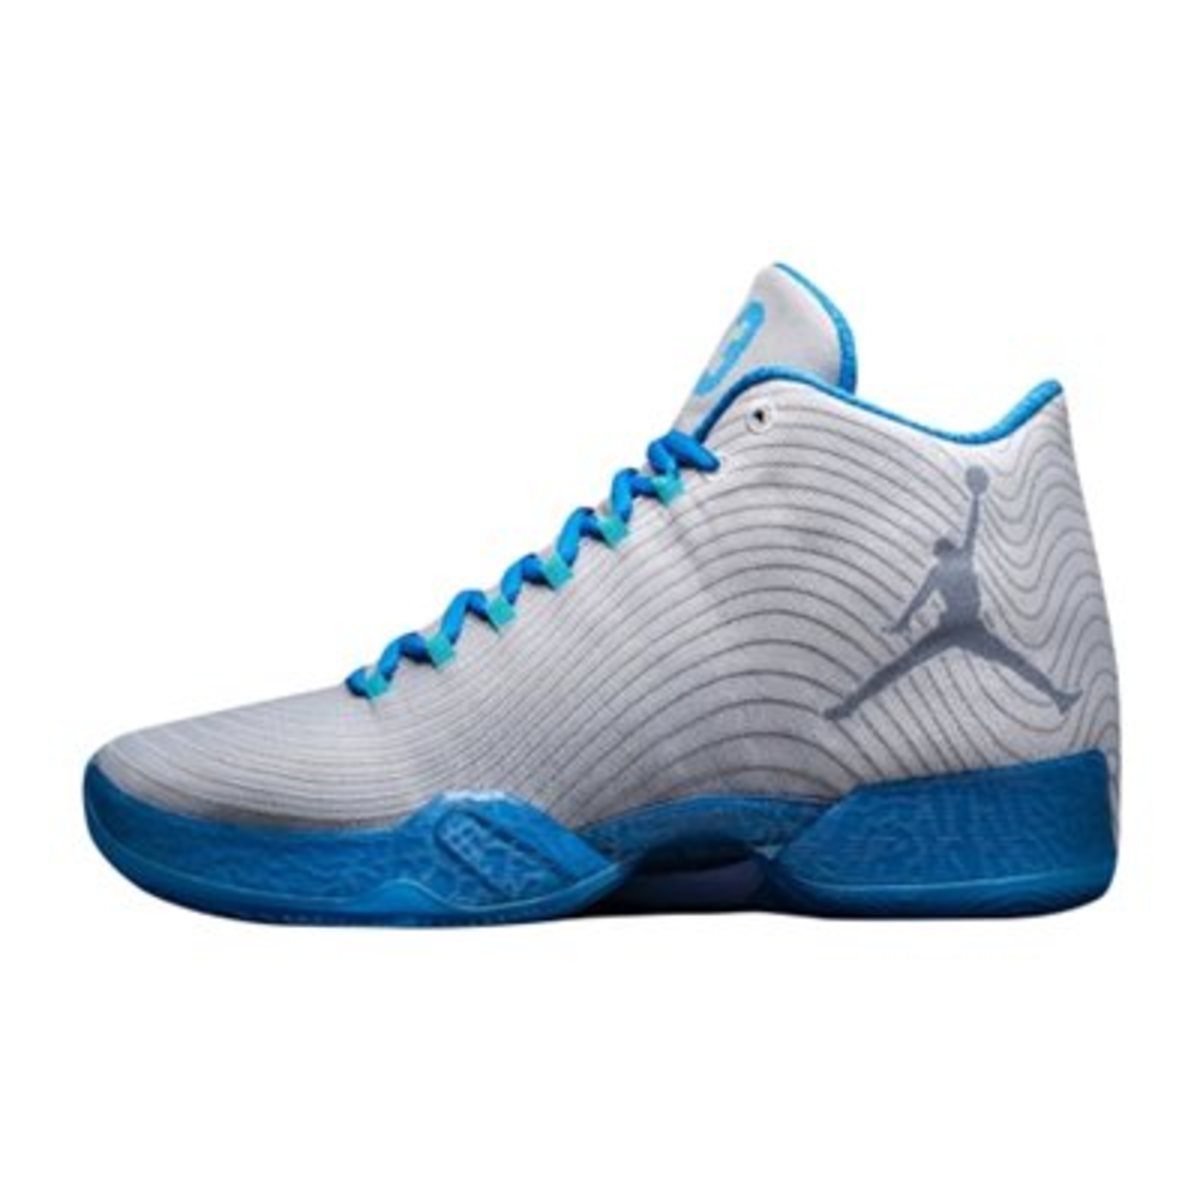 Basketball Jordan Shoes